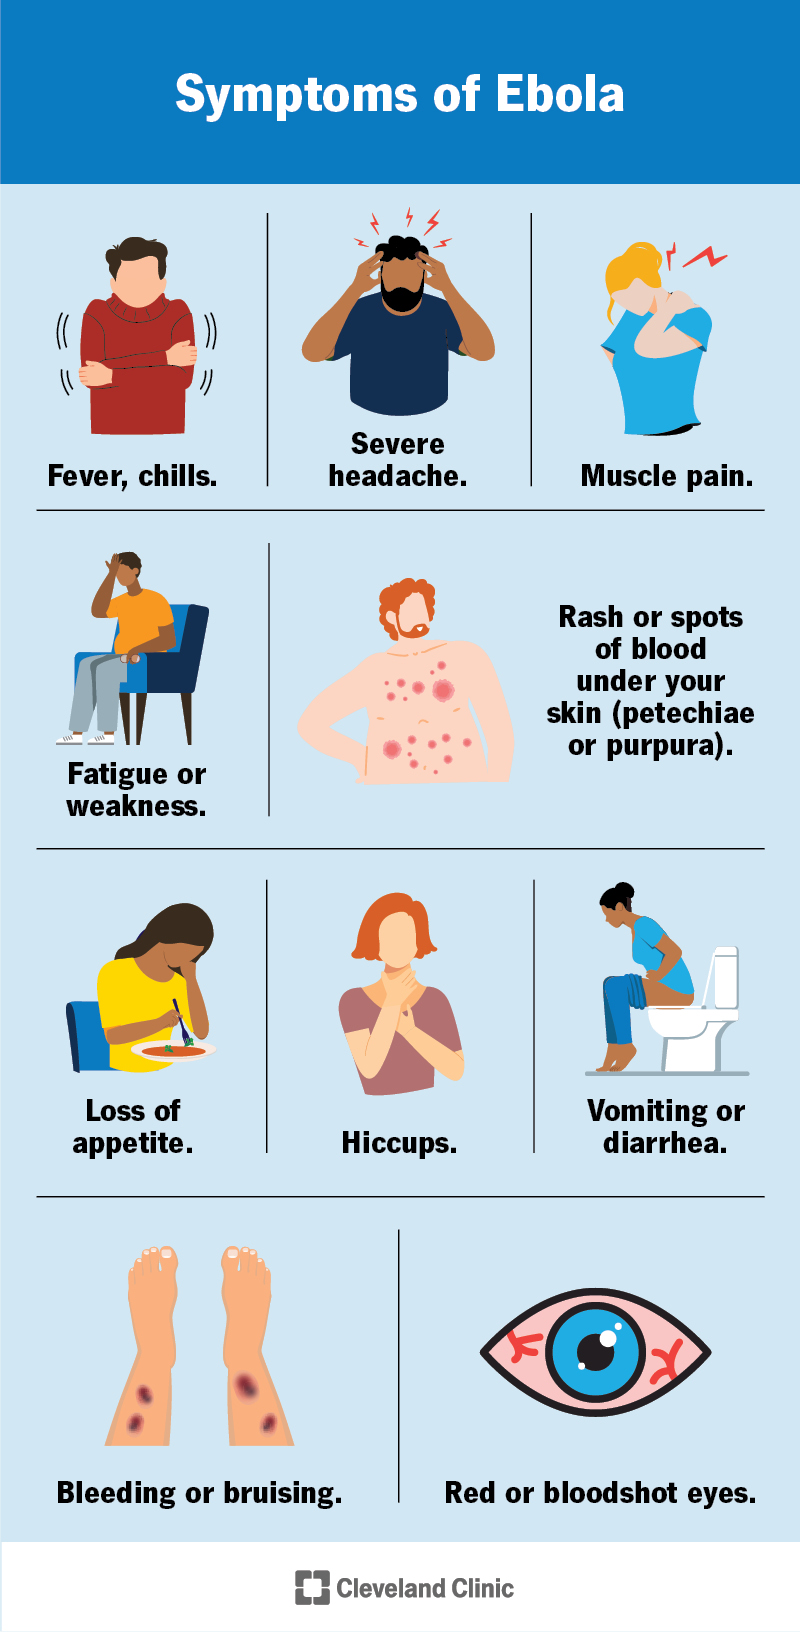 Symptoms of Ebola include fever, headache, muscle pain, fatigue, rash, vomiting, diarrhea, bleeding and more.